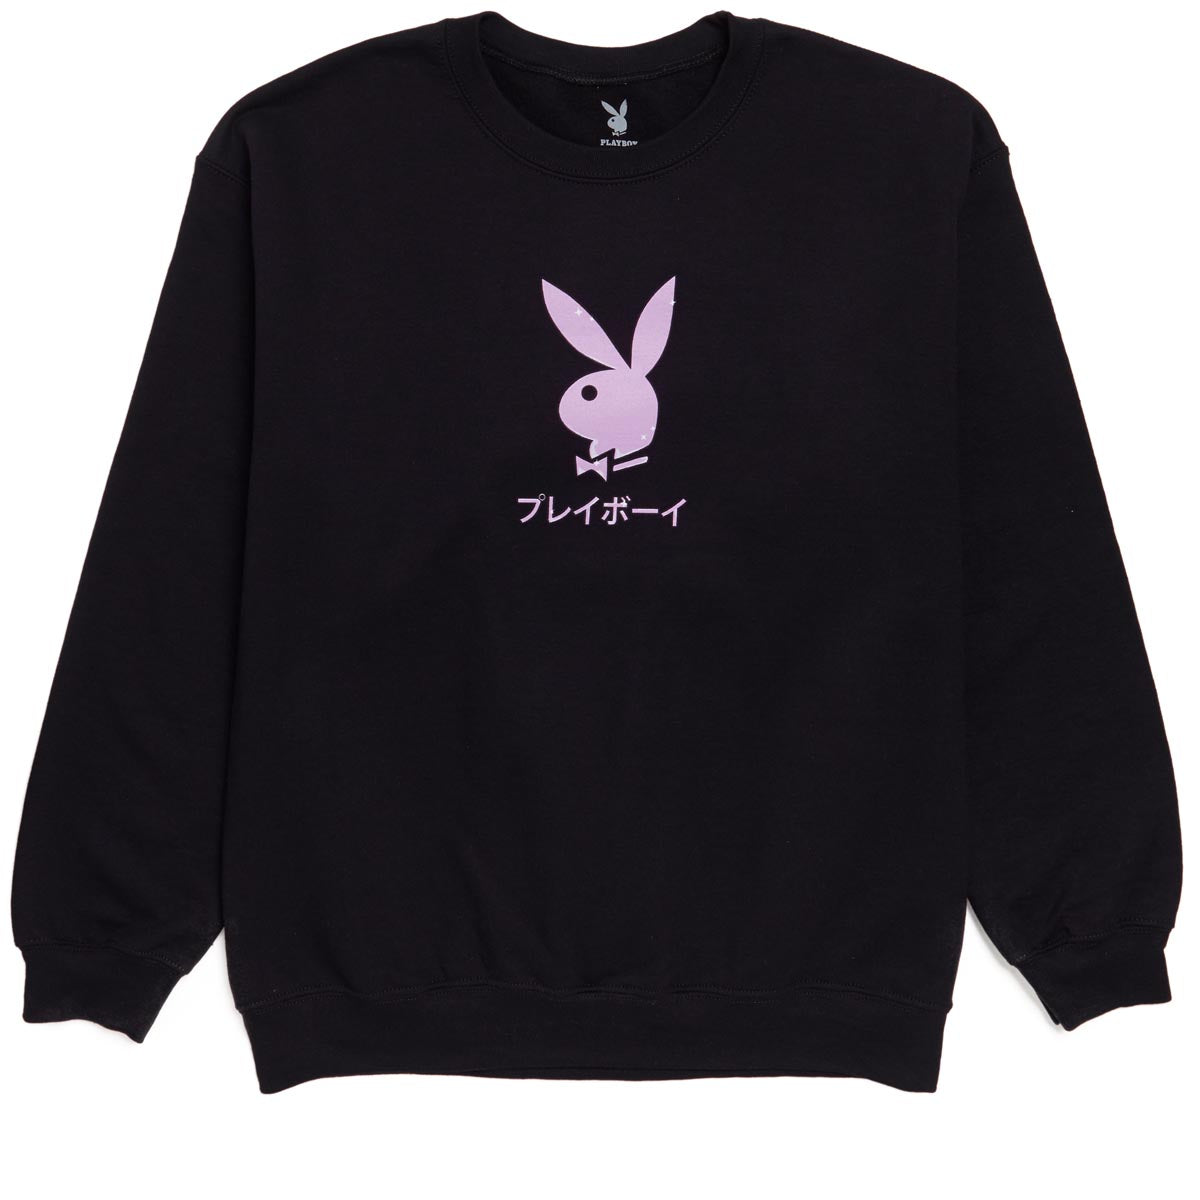 Color Bars x Playboy Tokyo Lady Luck Crewneck Sweatshirt - Black image 2